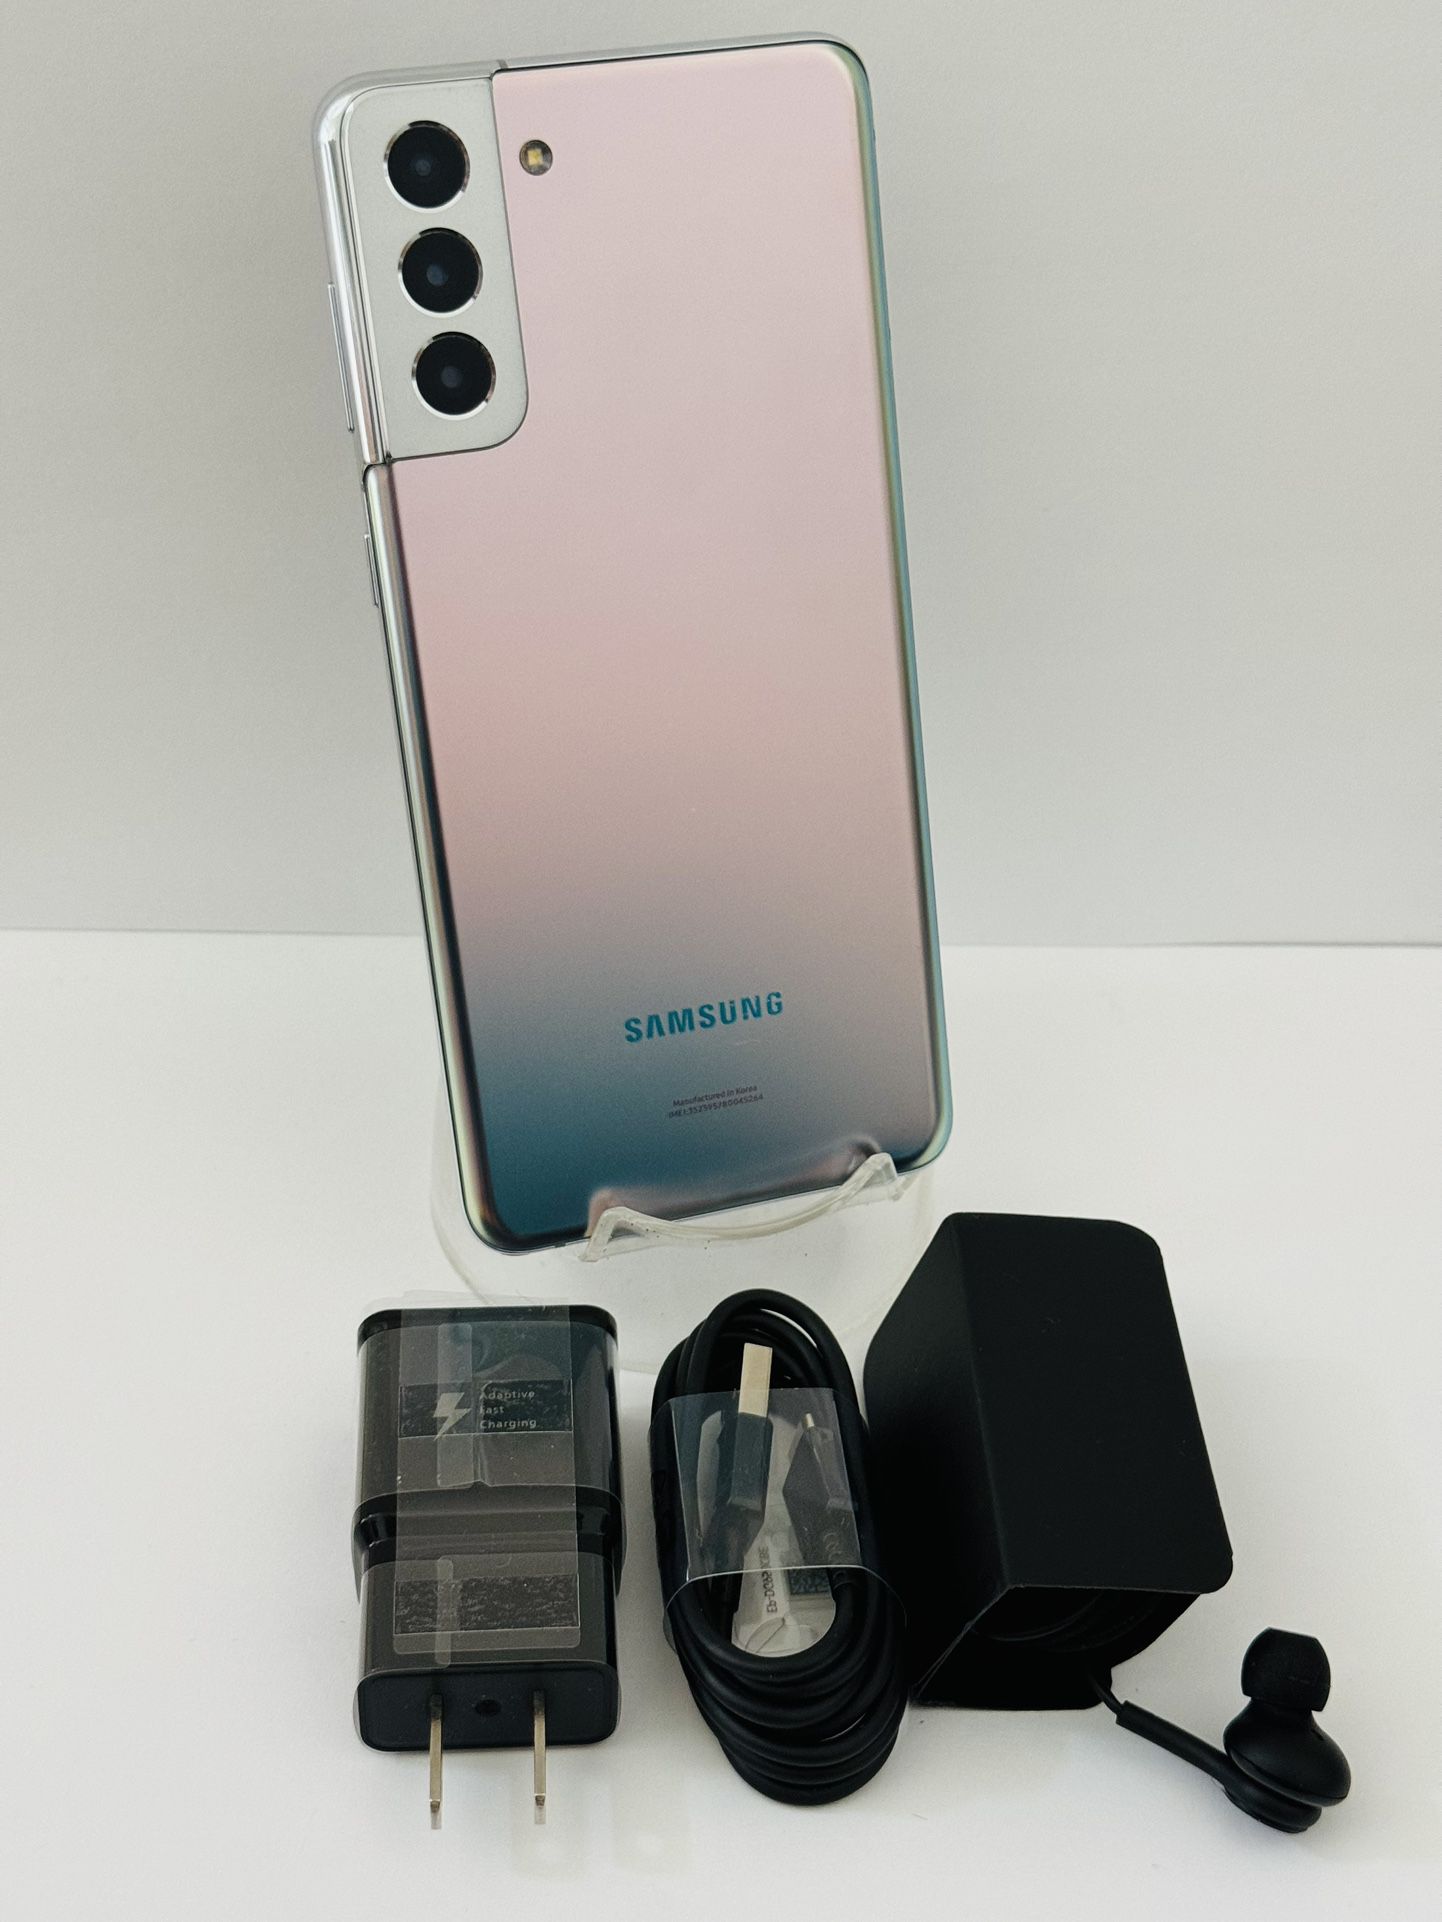 Samsung Galaxy S21 Plus 5g (128gb) Silver UNLOCKED